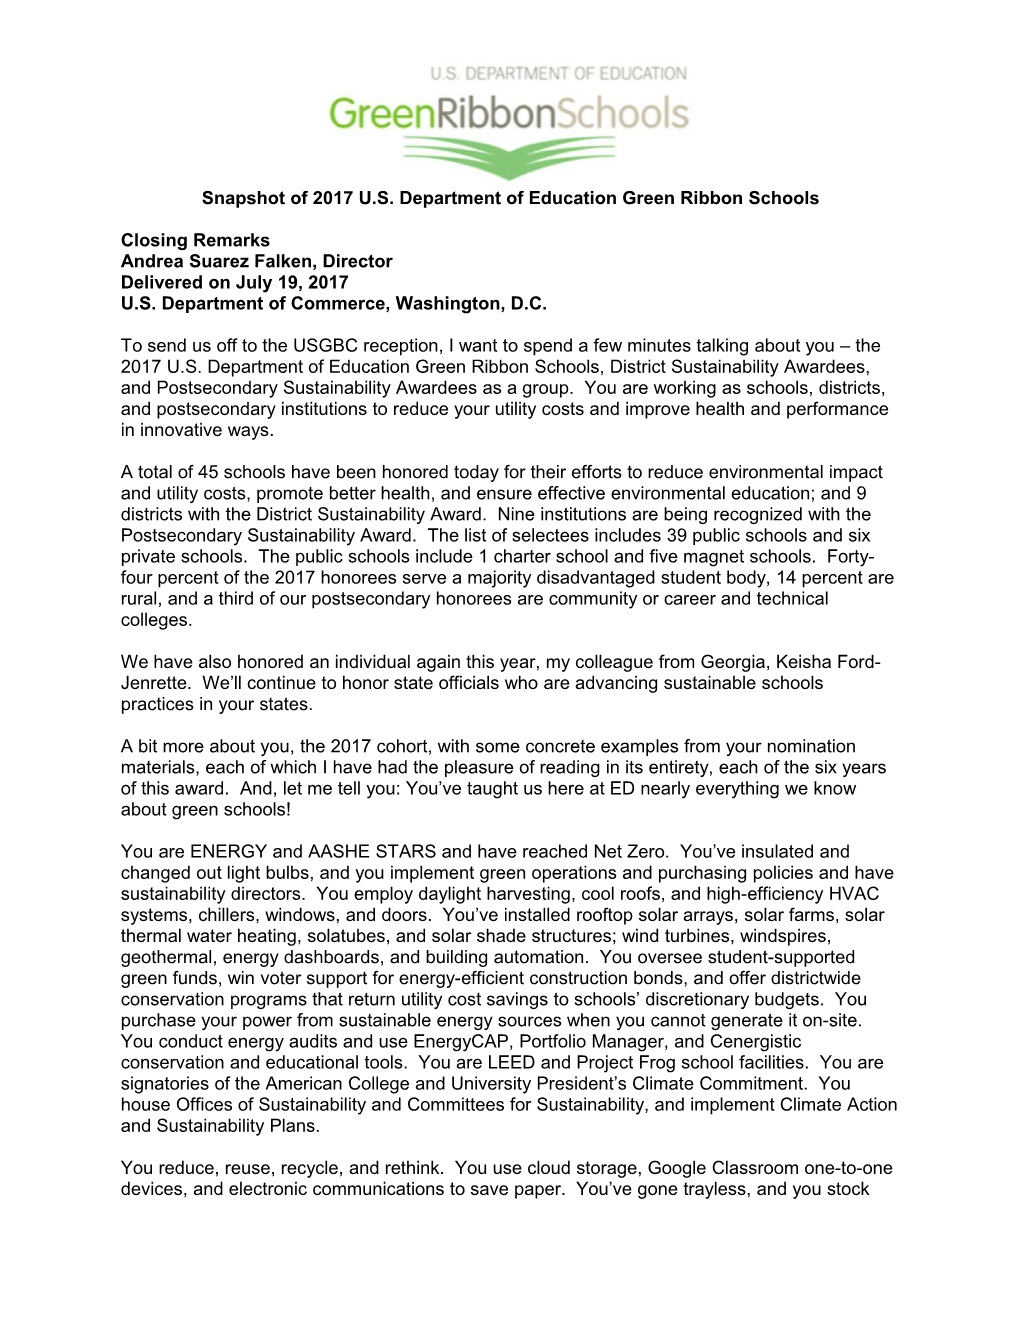 Snapshot of 2017 U.S. Department of Education Green Ribbon Schools (MS Word)